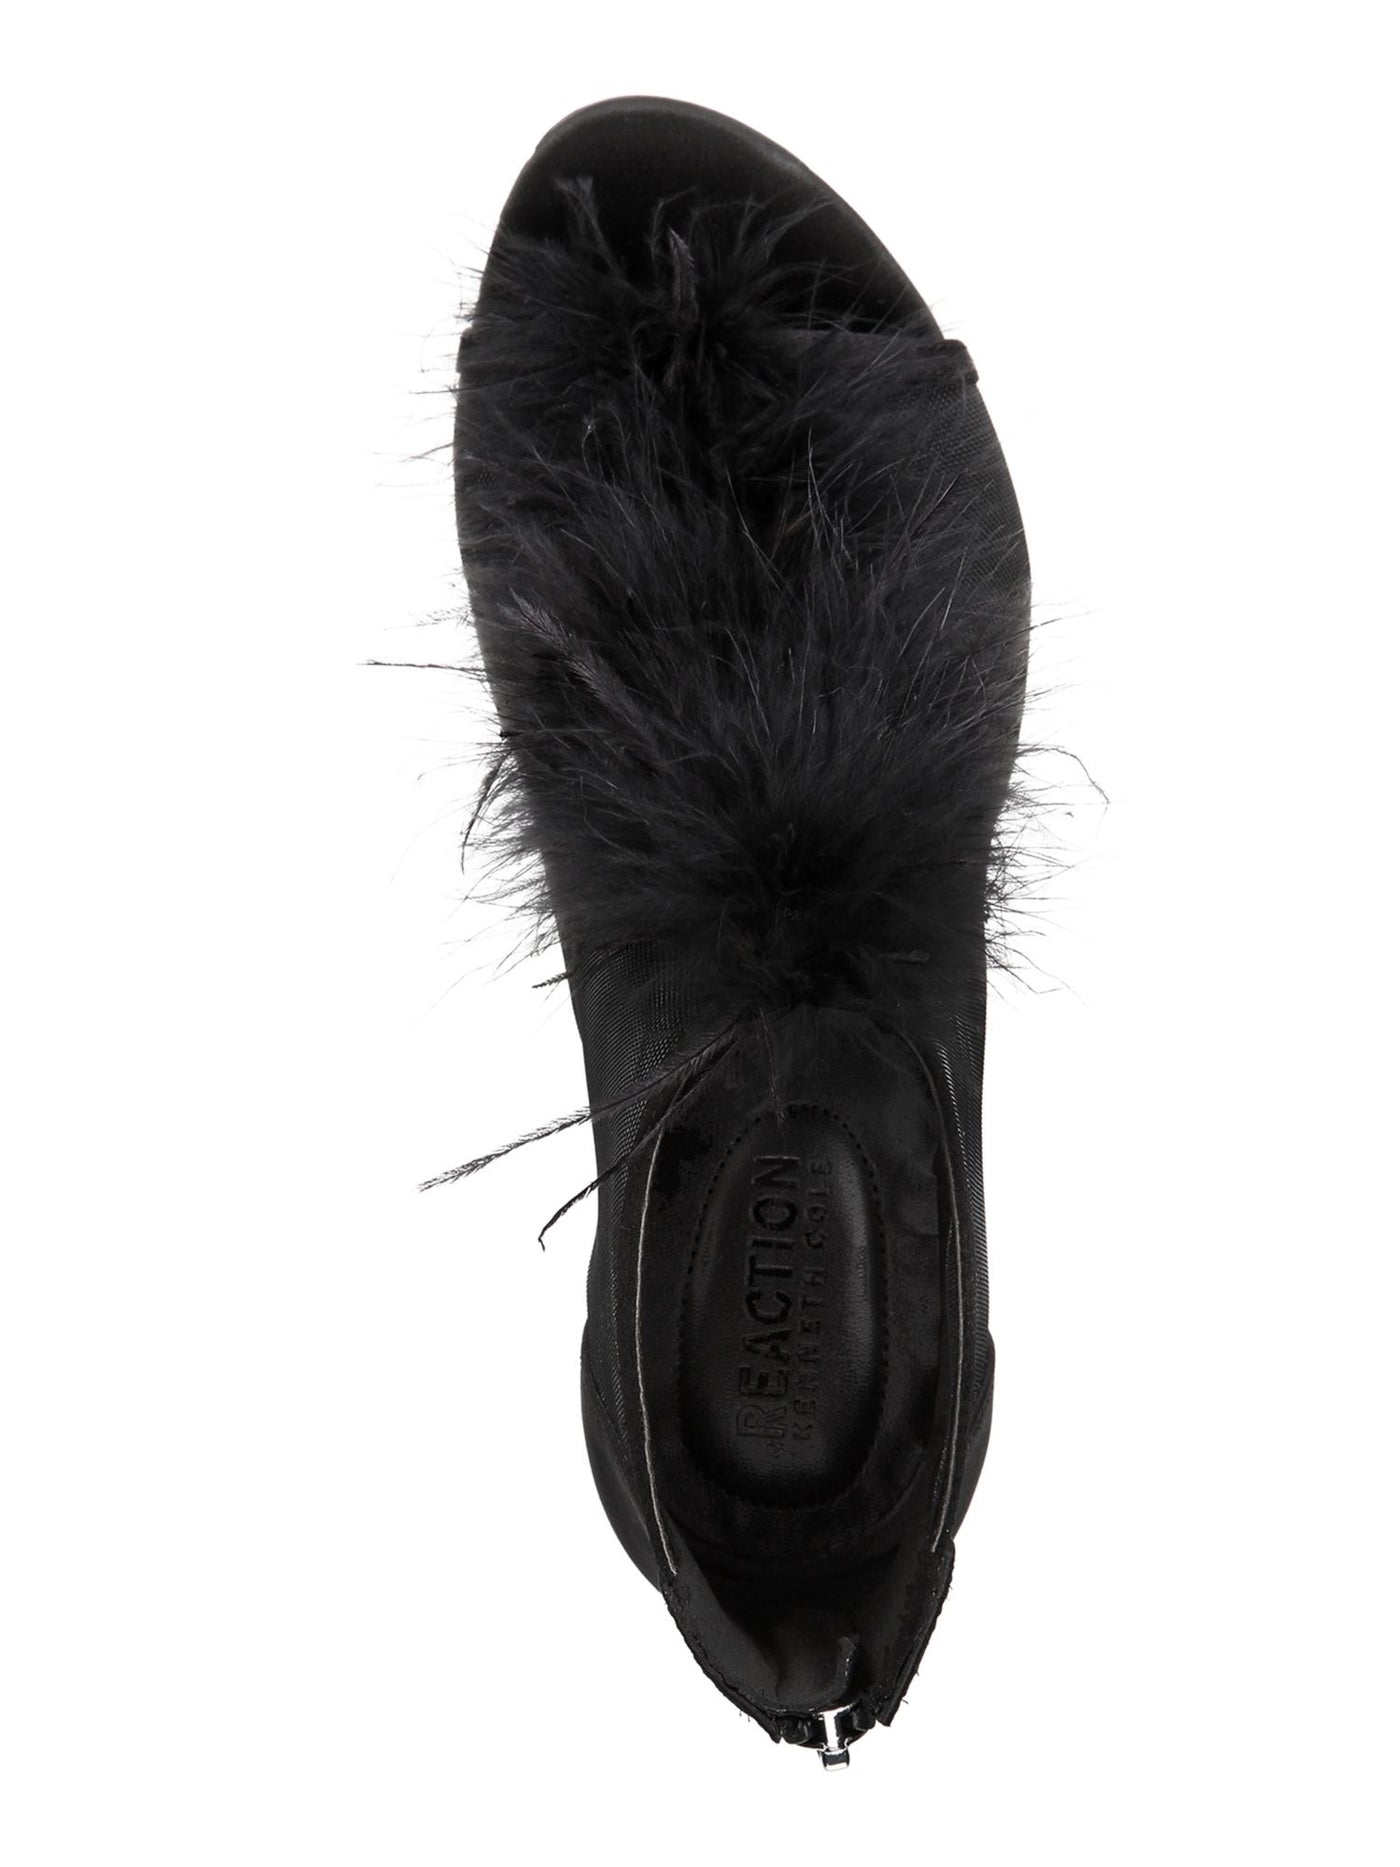 KENNETH COLE Womens Black Mesh Boa Detail Padded Smash Boa Open Toe Stiletto Zip-Up Dress Heels Shoes 6 M